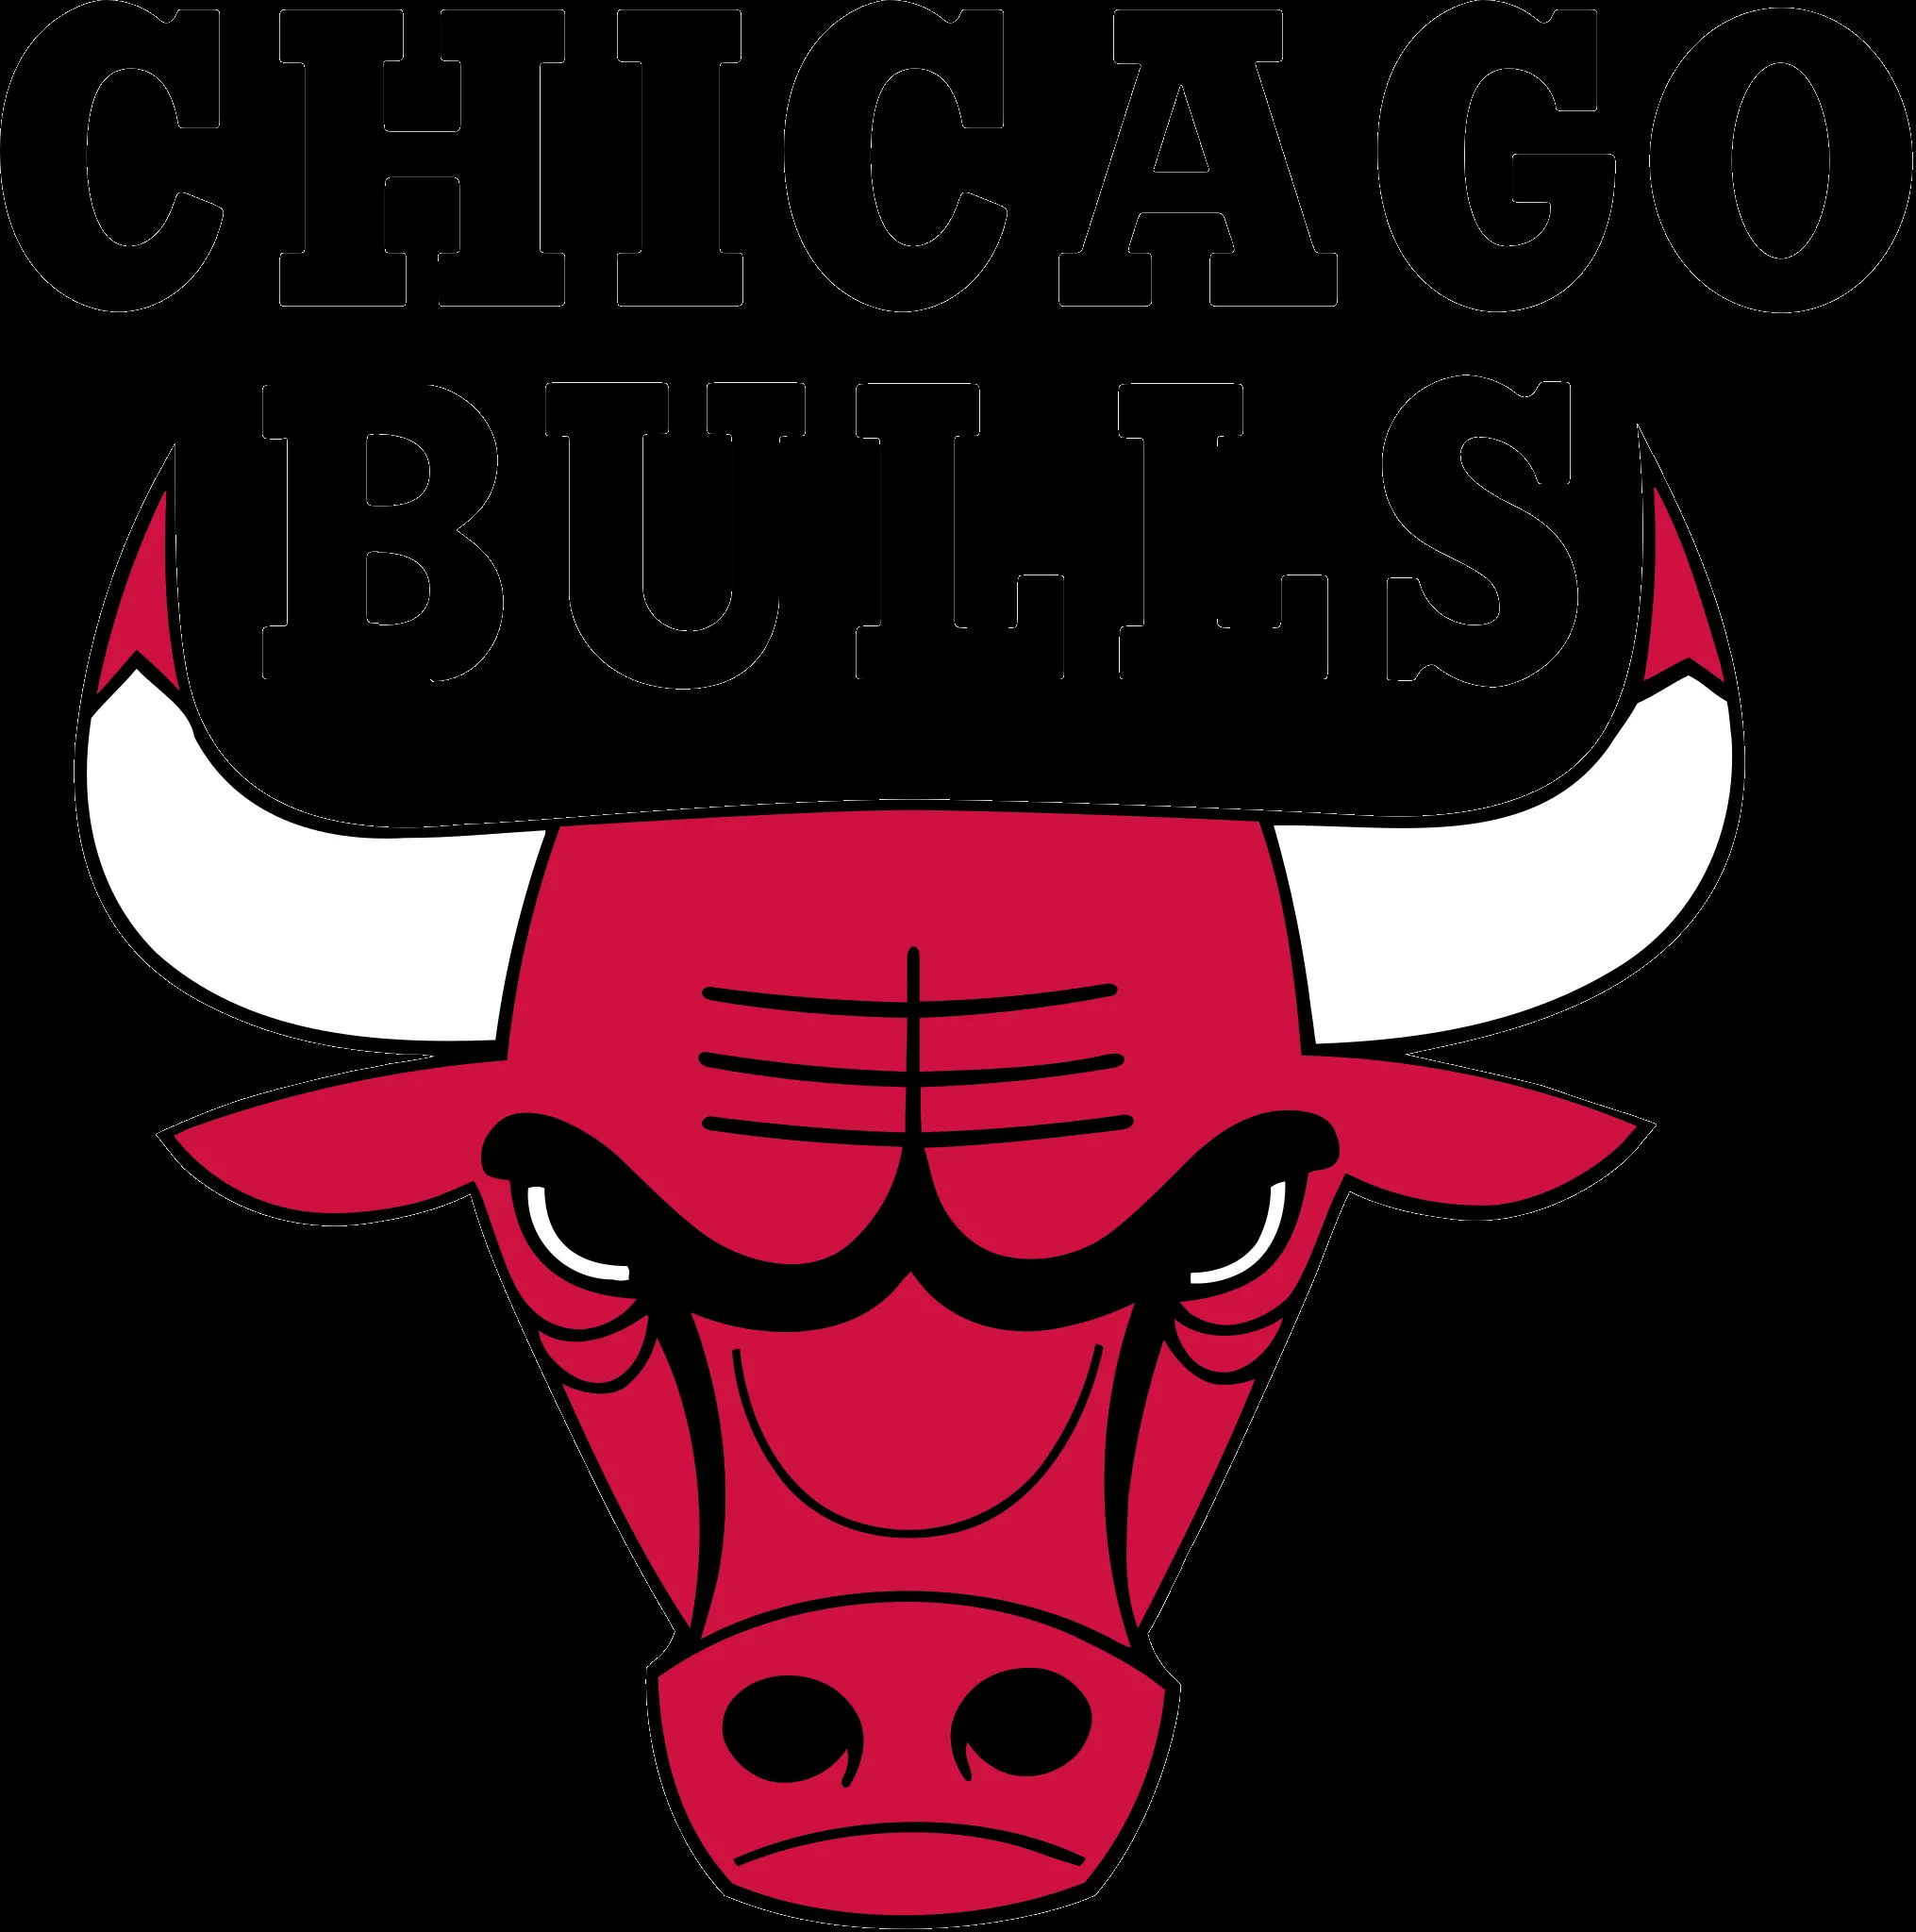 Chicago Bulls - Basketball Wiki